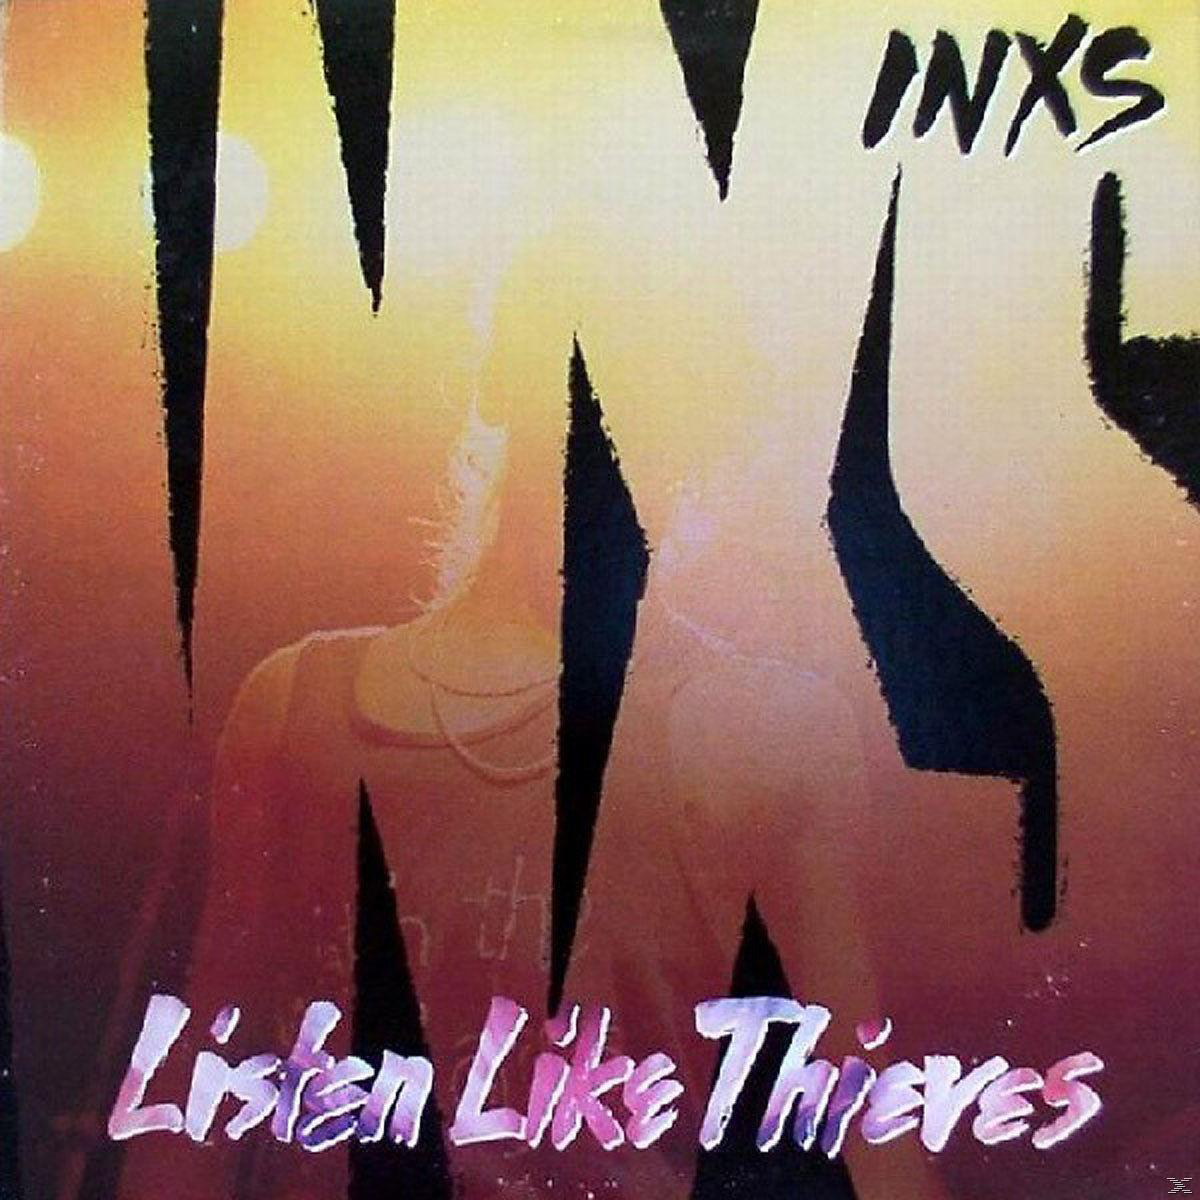 Listen (Vinyl) (Vinyl) - Like - Thieves INXS